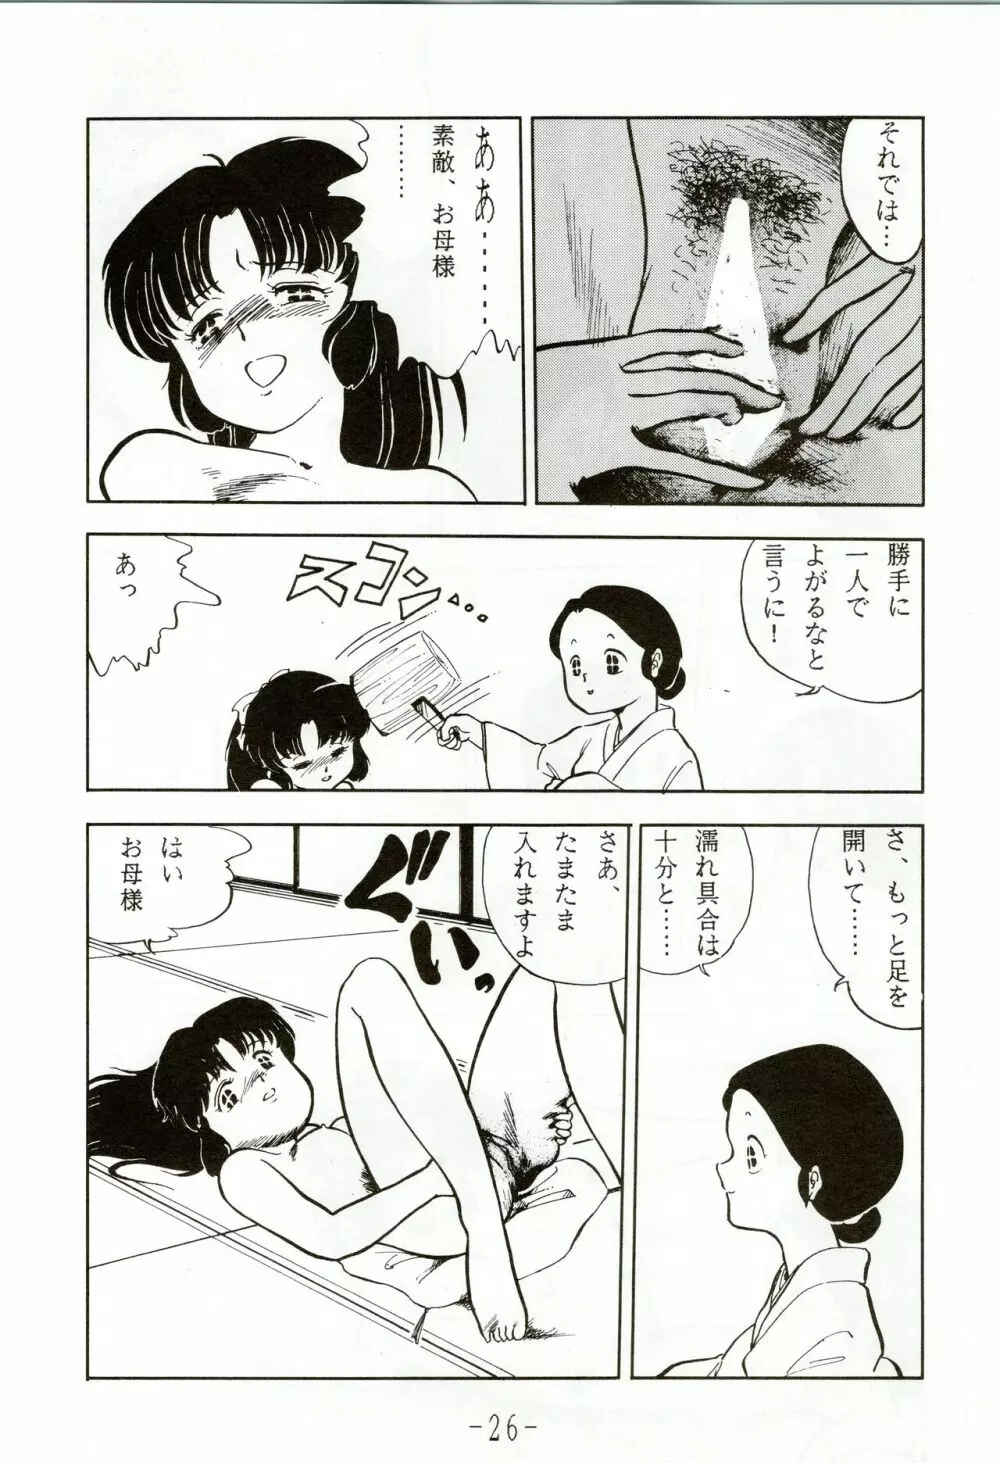 甲冑伝説 - page26